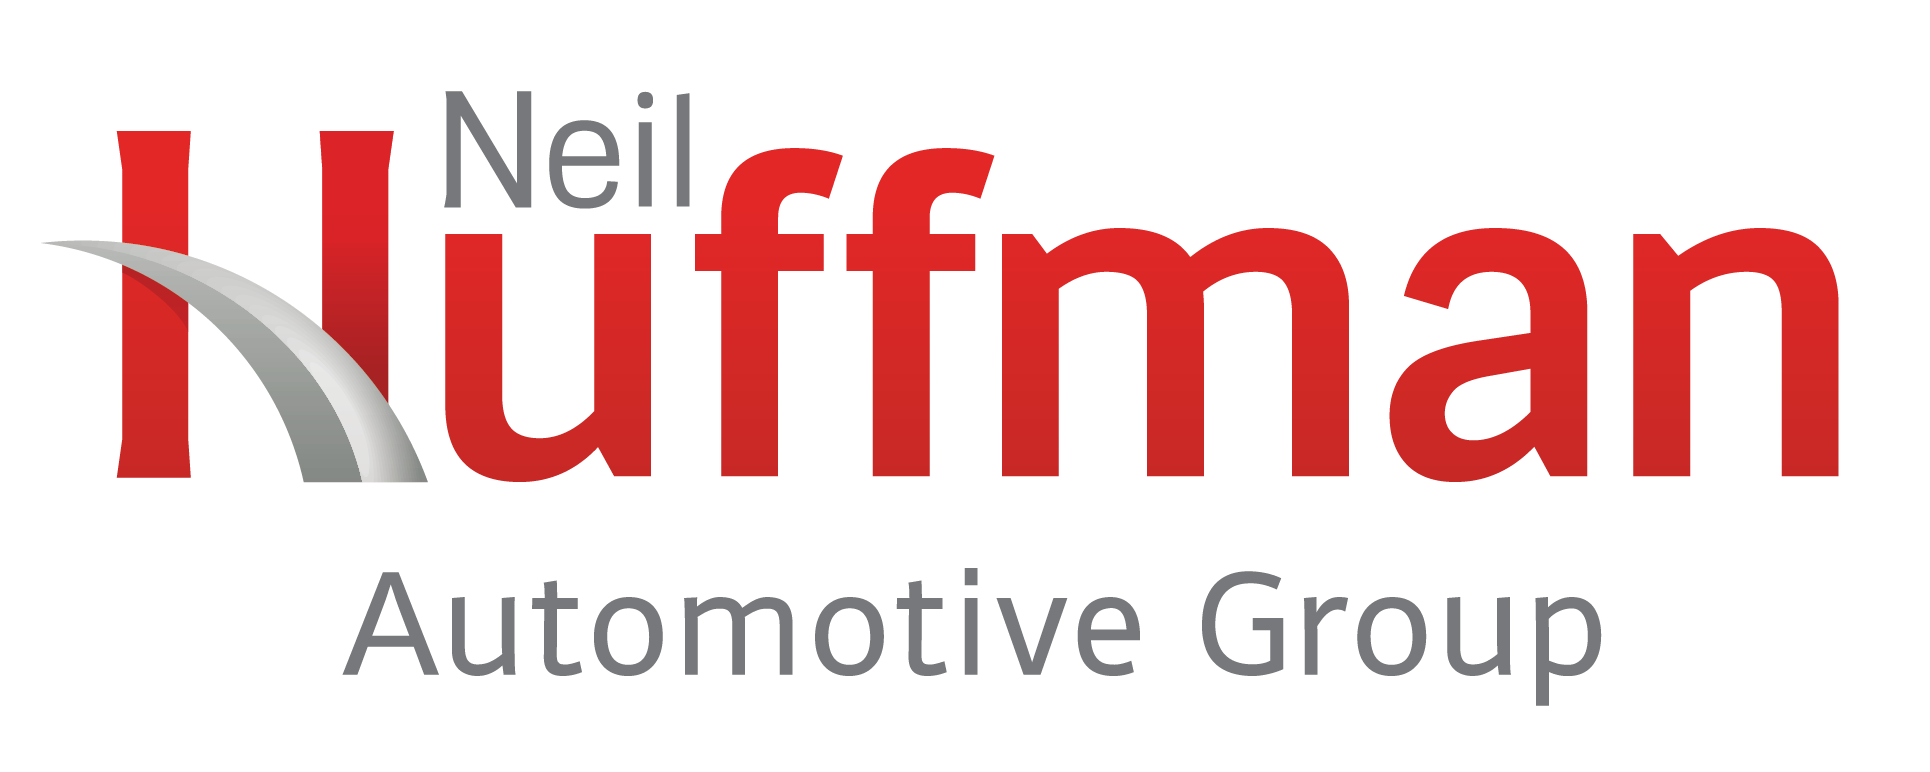 Neil Huffman Automotive Group Louisville, KY